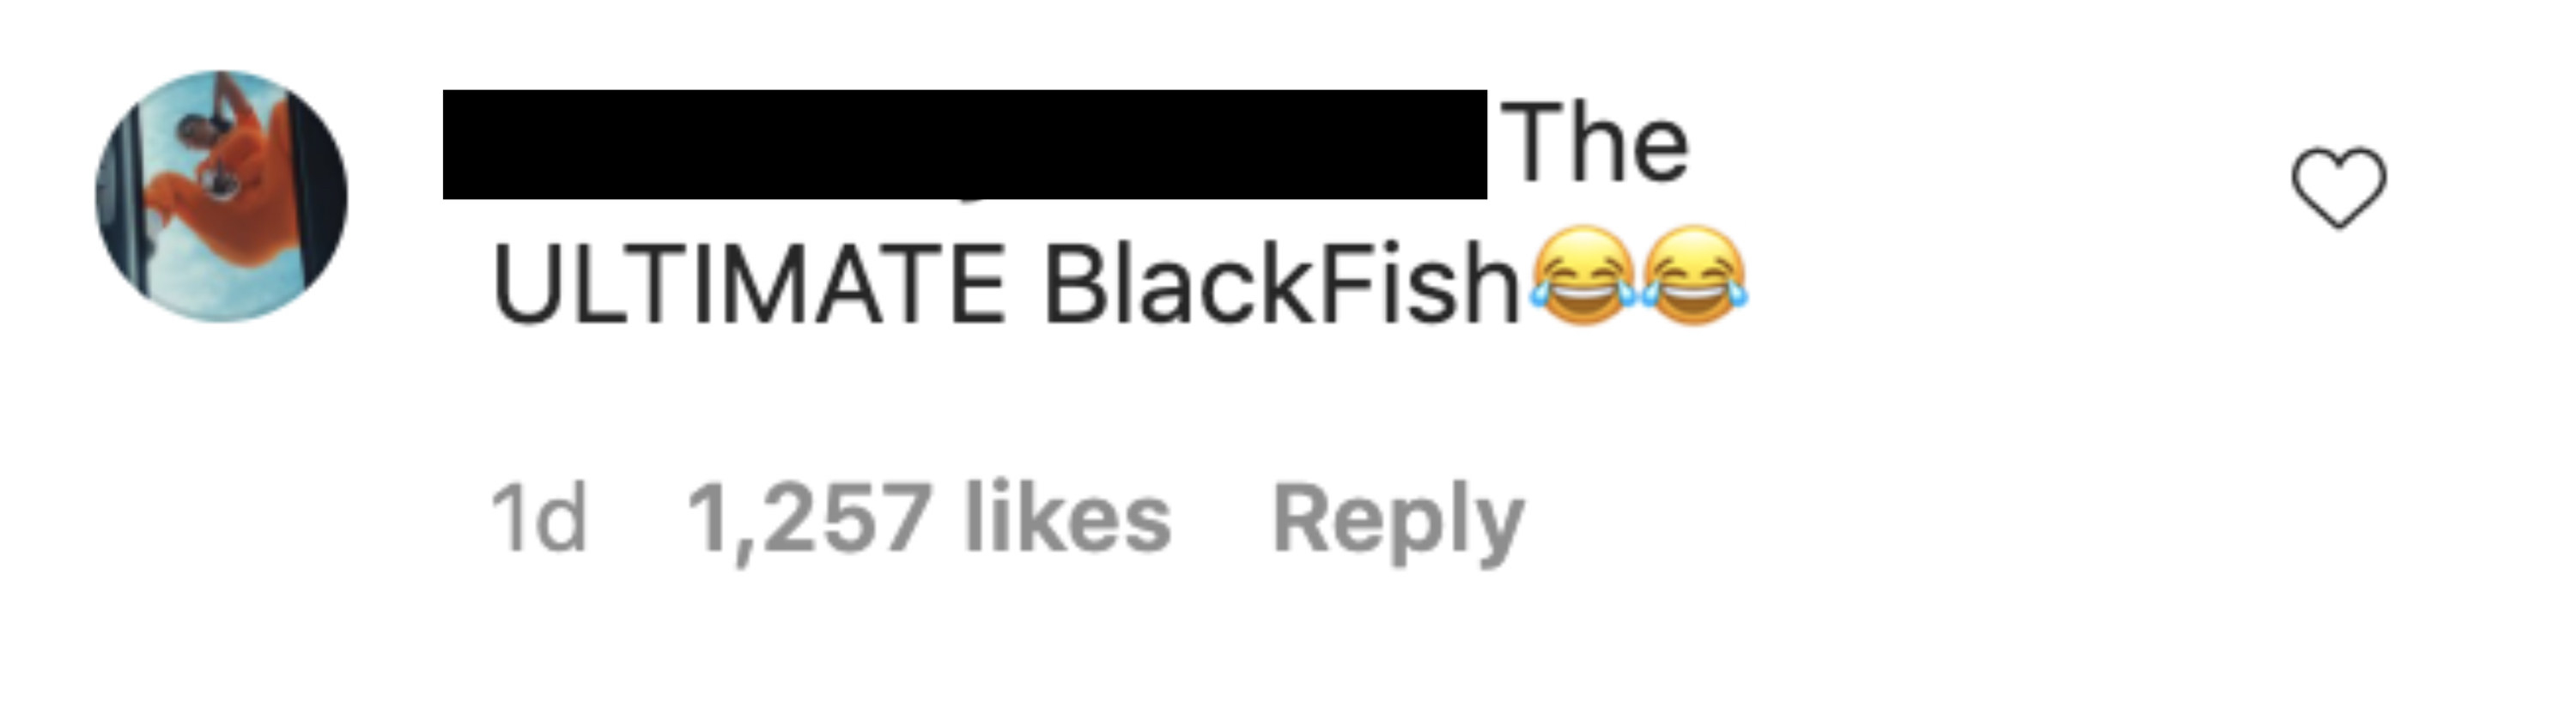 The ULTIMATE BlackFish